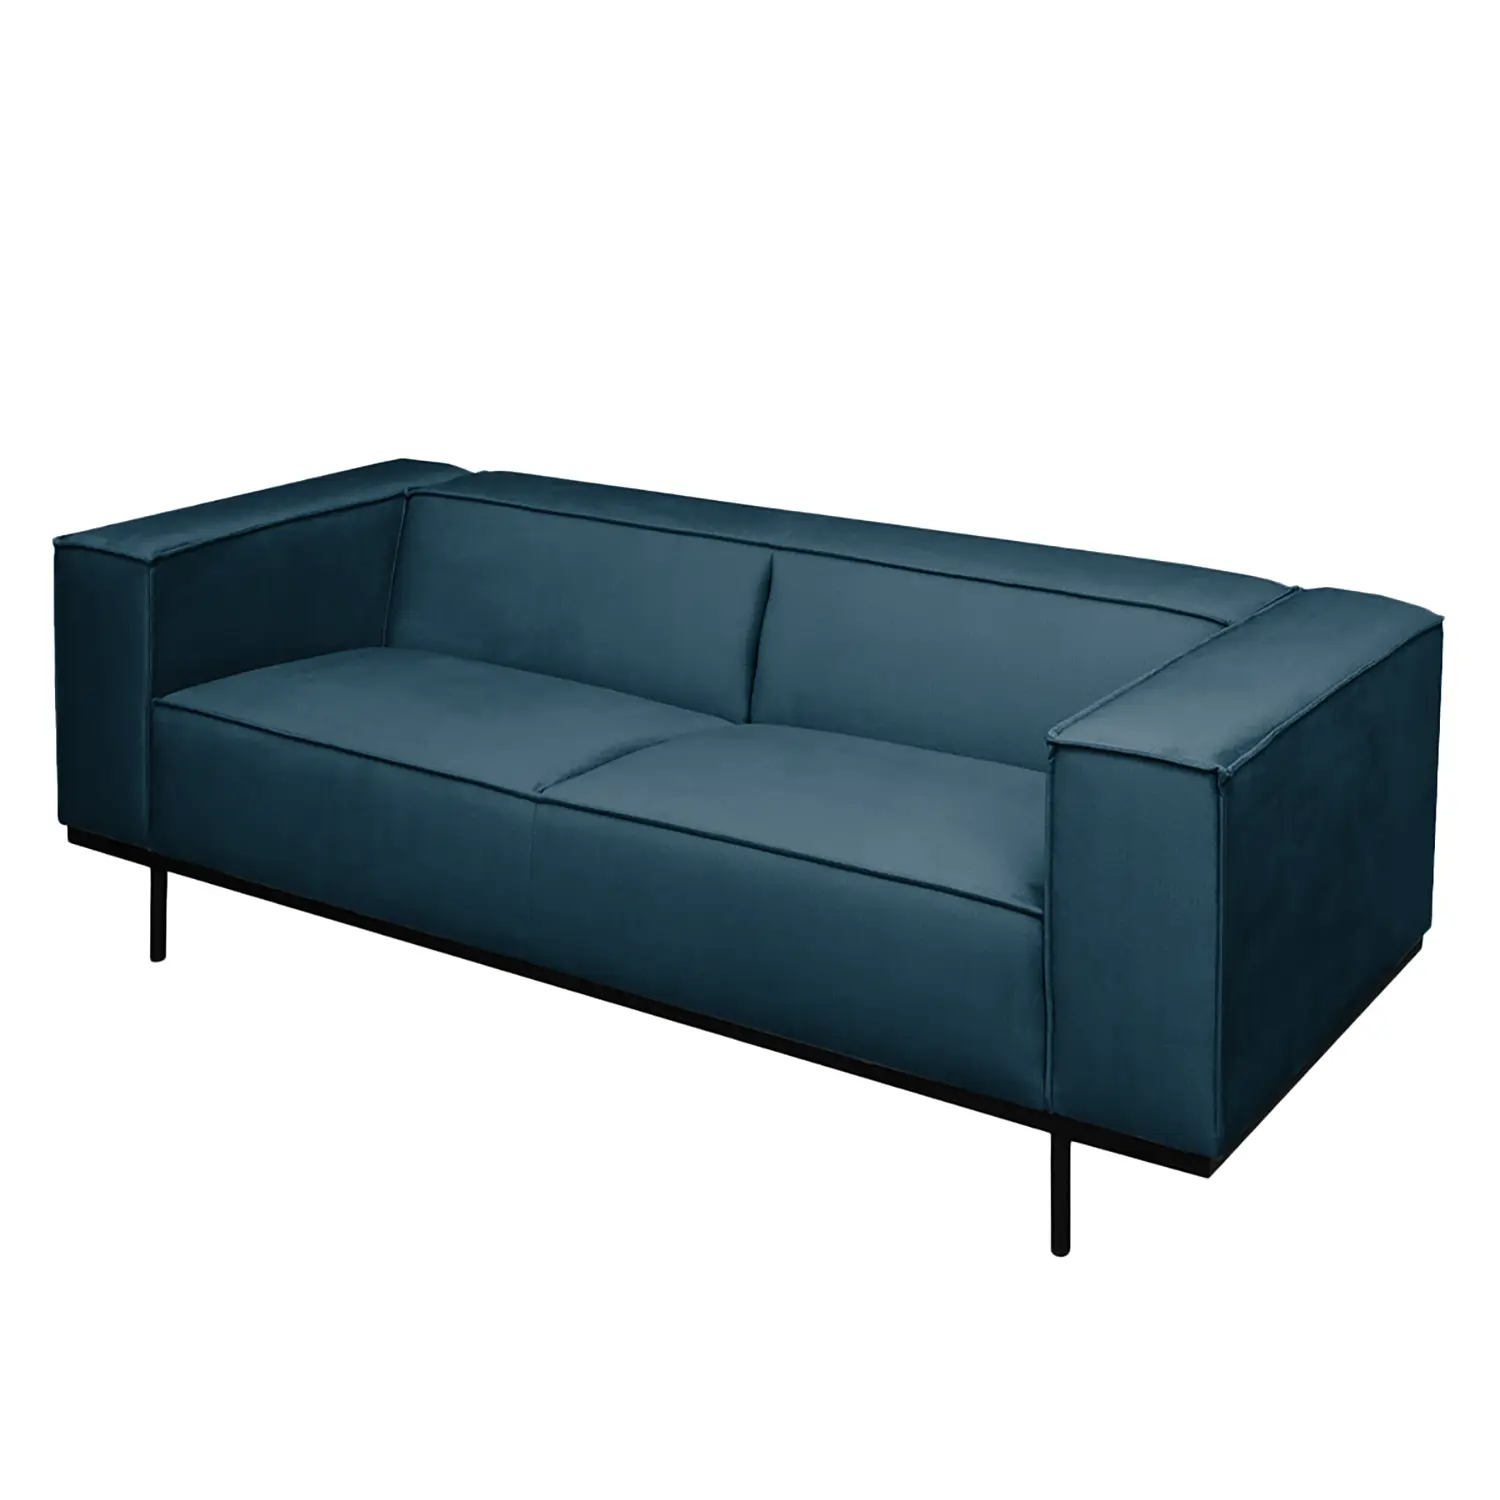 Echter Produktverkauf! Sofa Kups I (2,5-Sitzer)